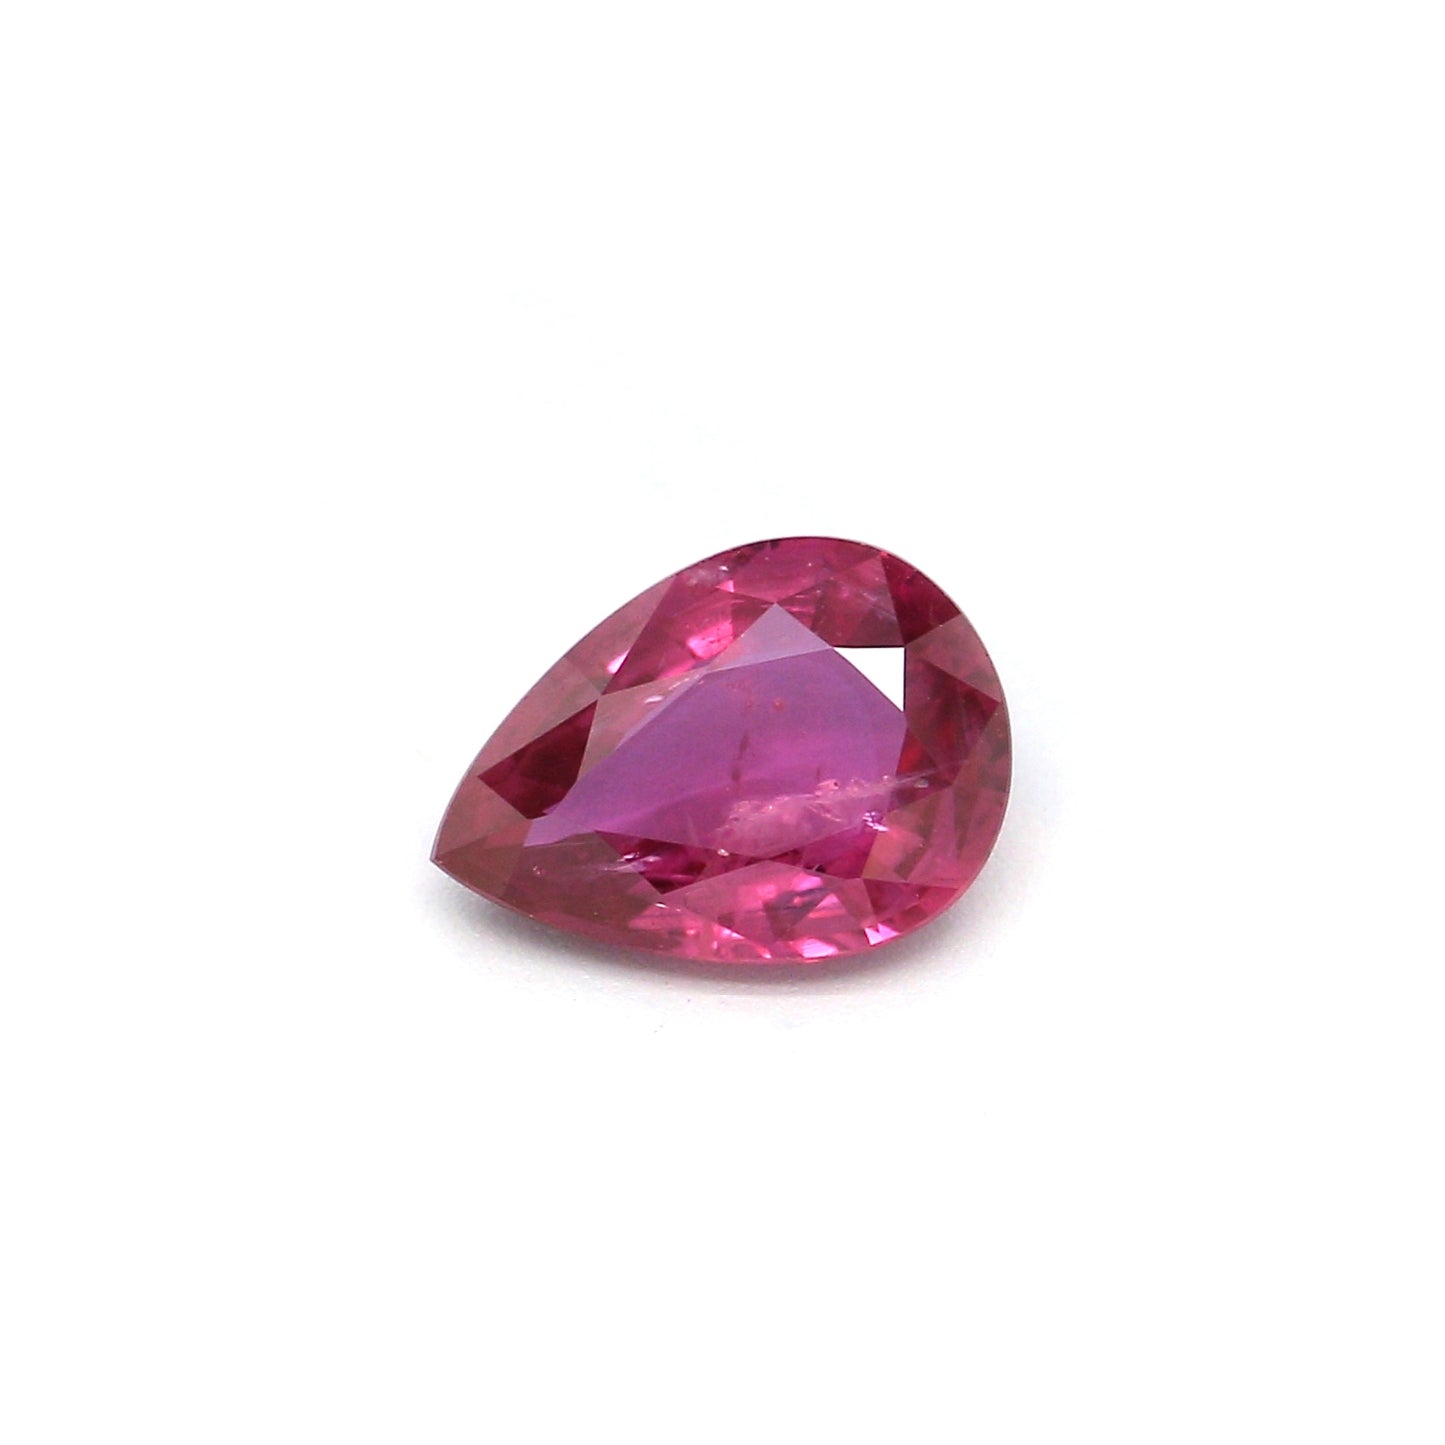 0.62ct Purplish Pink, Pear Shape Sapphire, Heated, Thailand - 6.76 x 4.86 x 2.27mm